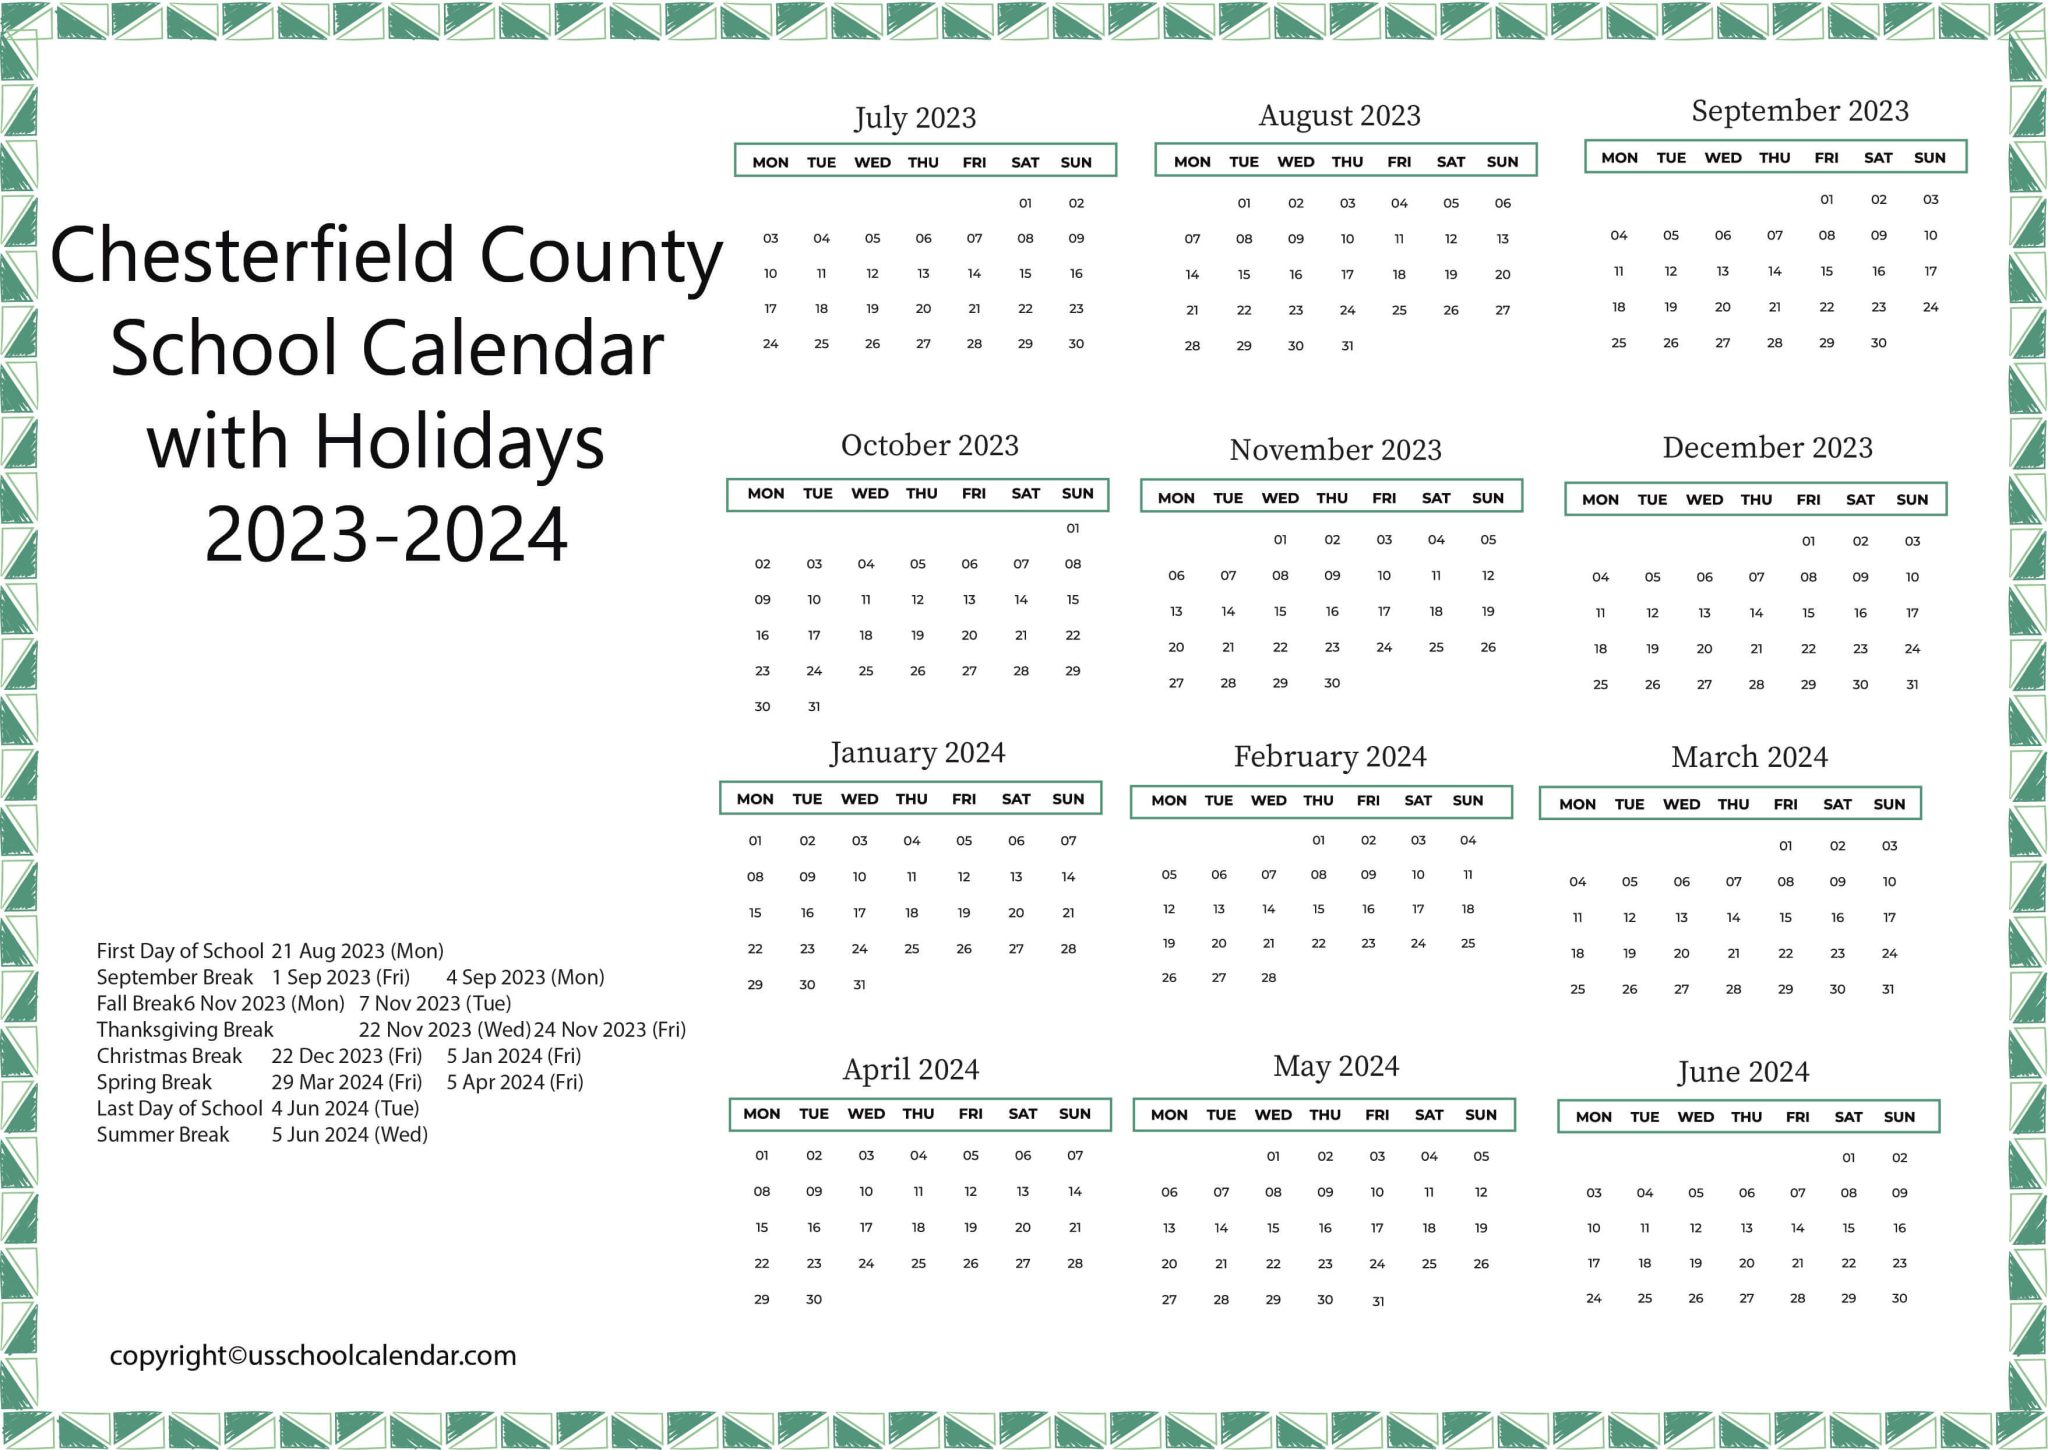 Chesterfield County School District Calendar 2048x1450 